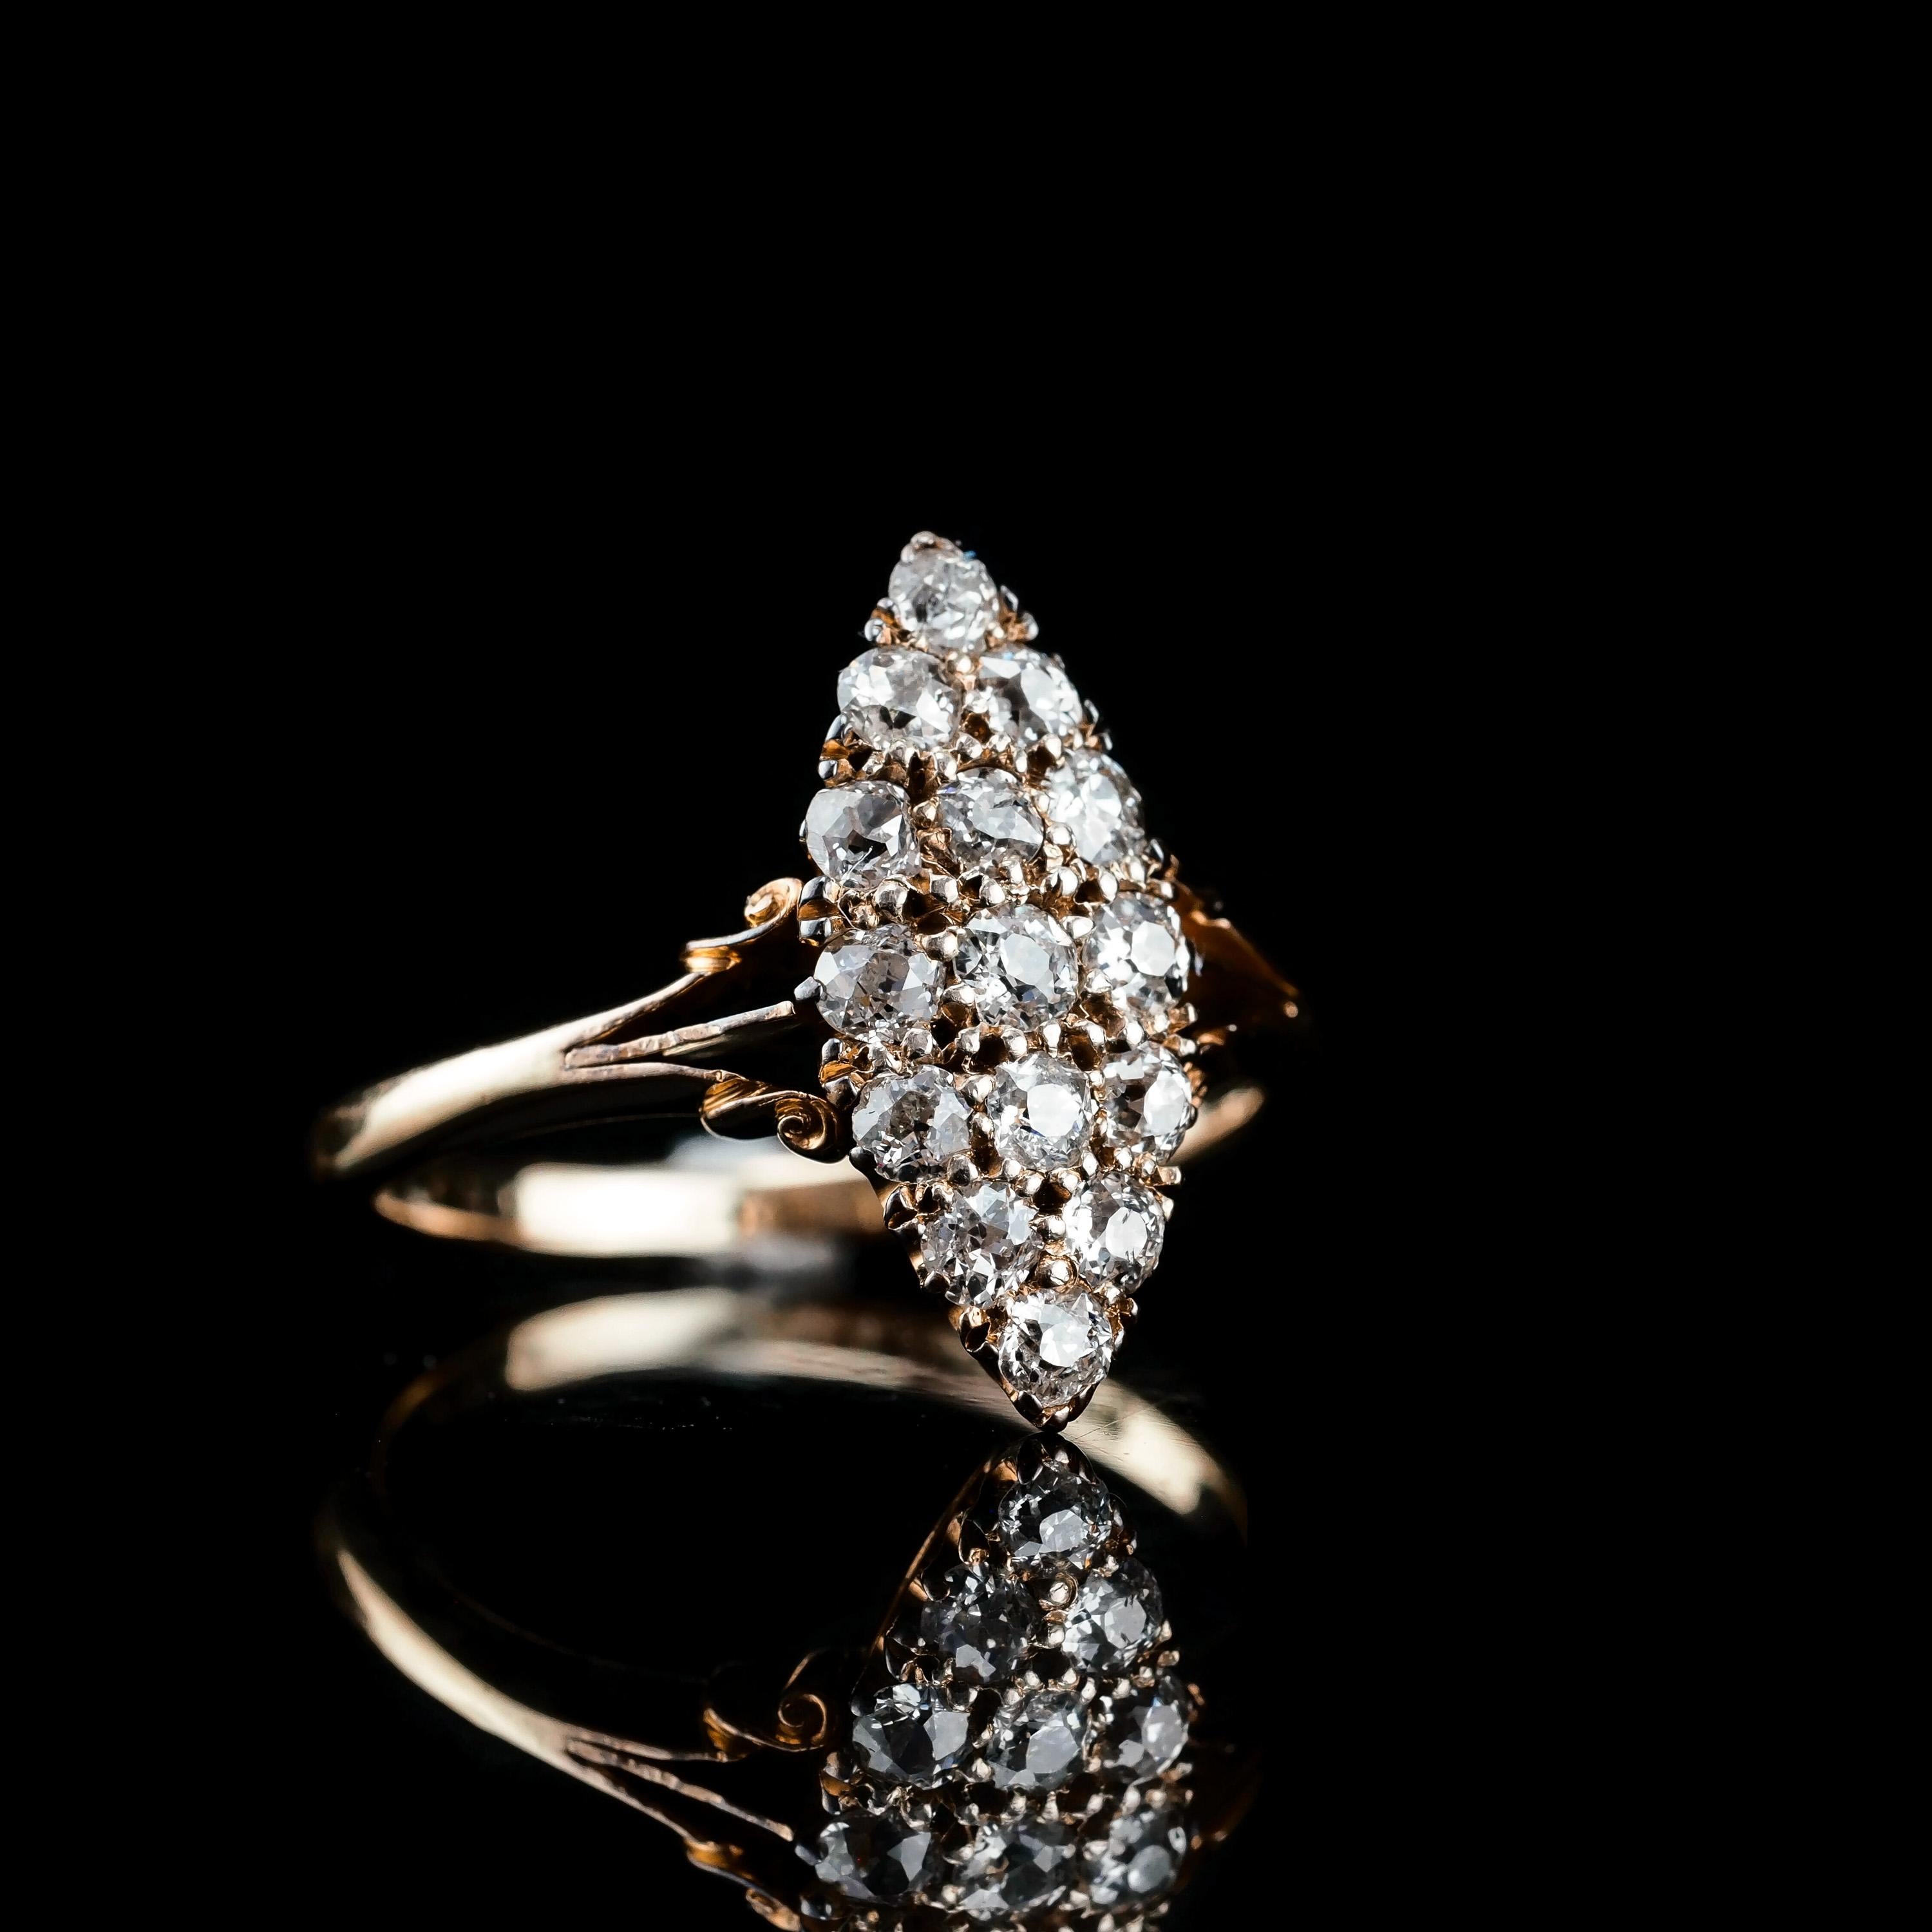 Antique Diamond Ring 18K Gold Navette/Cluster Design - c.1900s For Sale 1